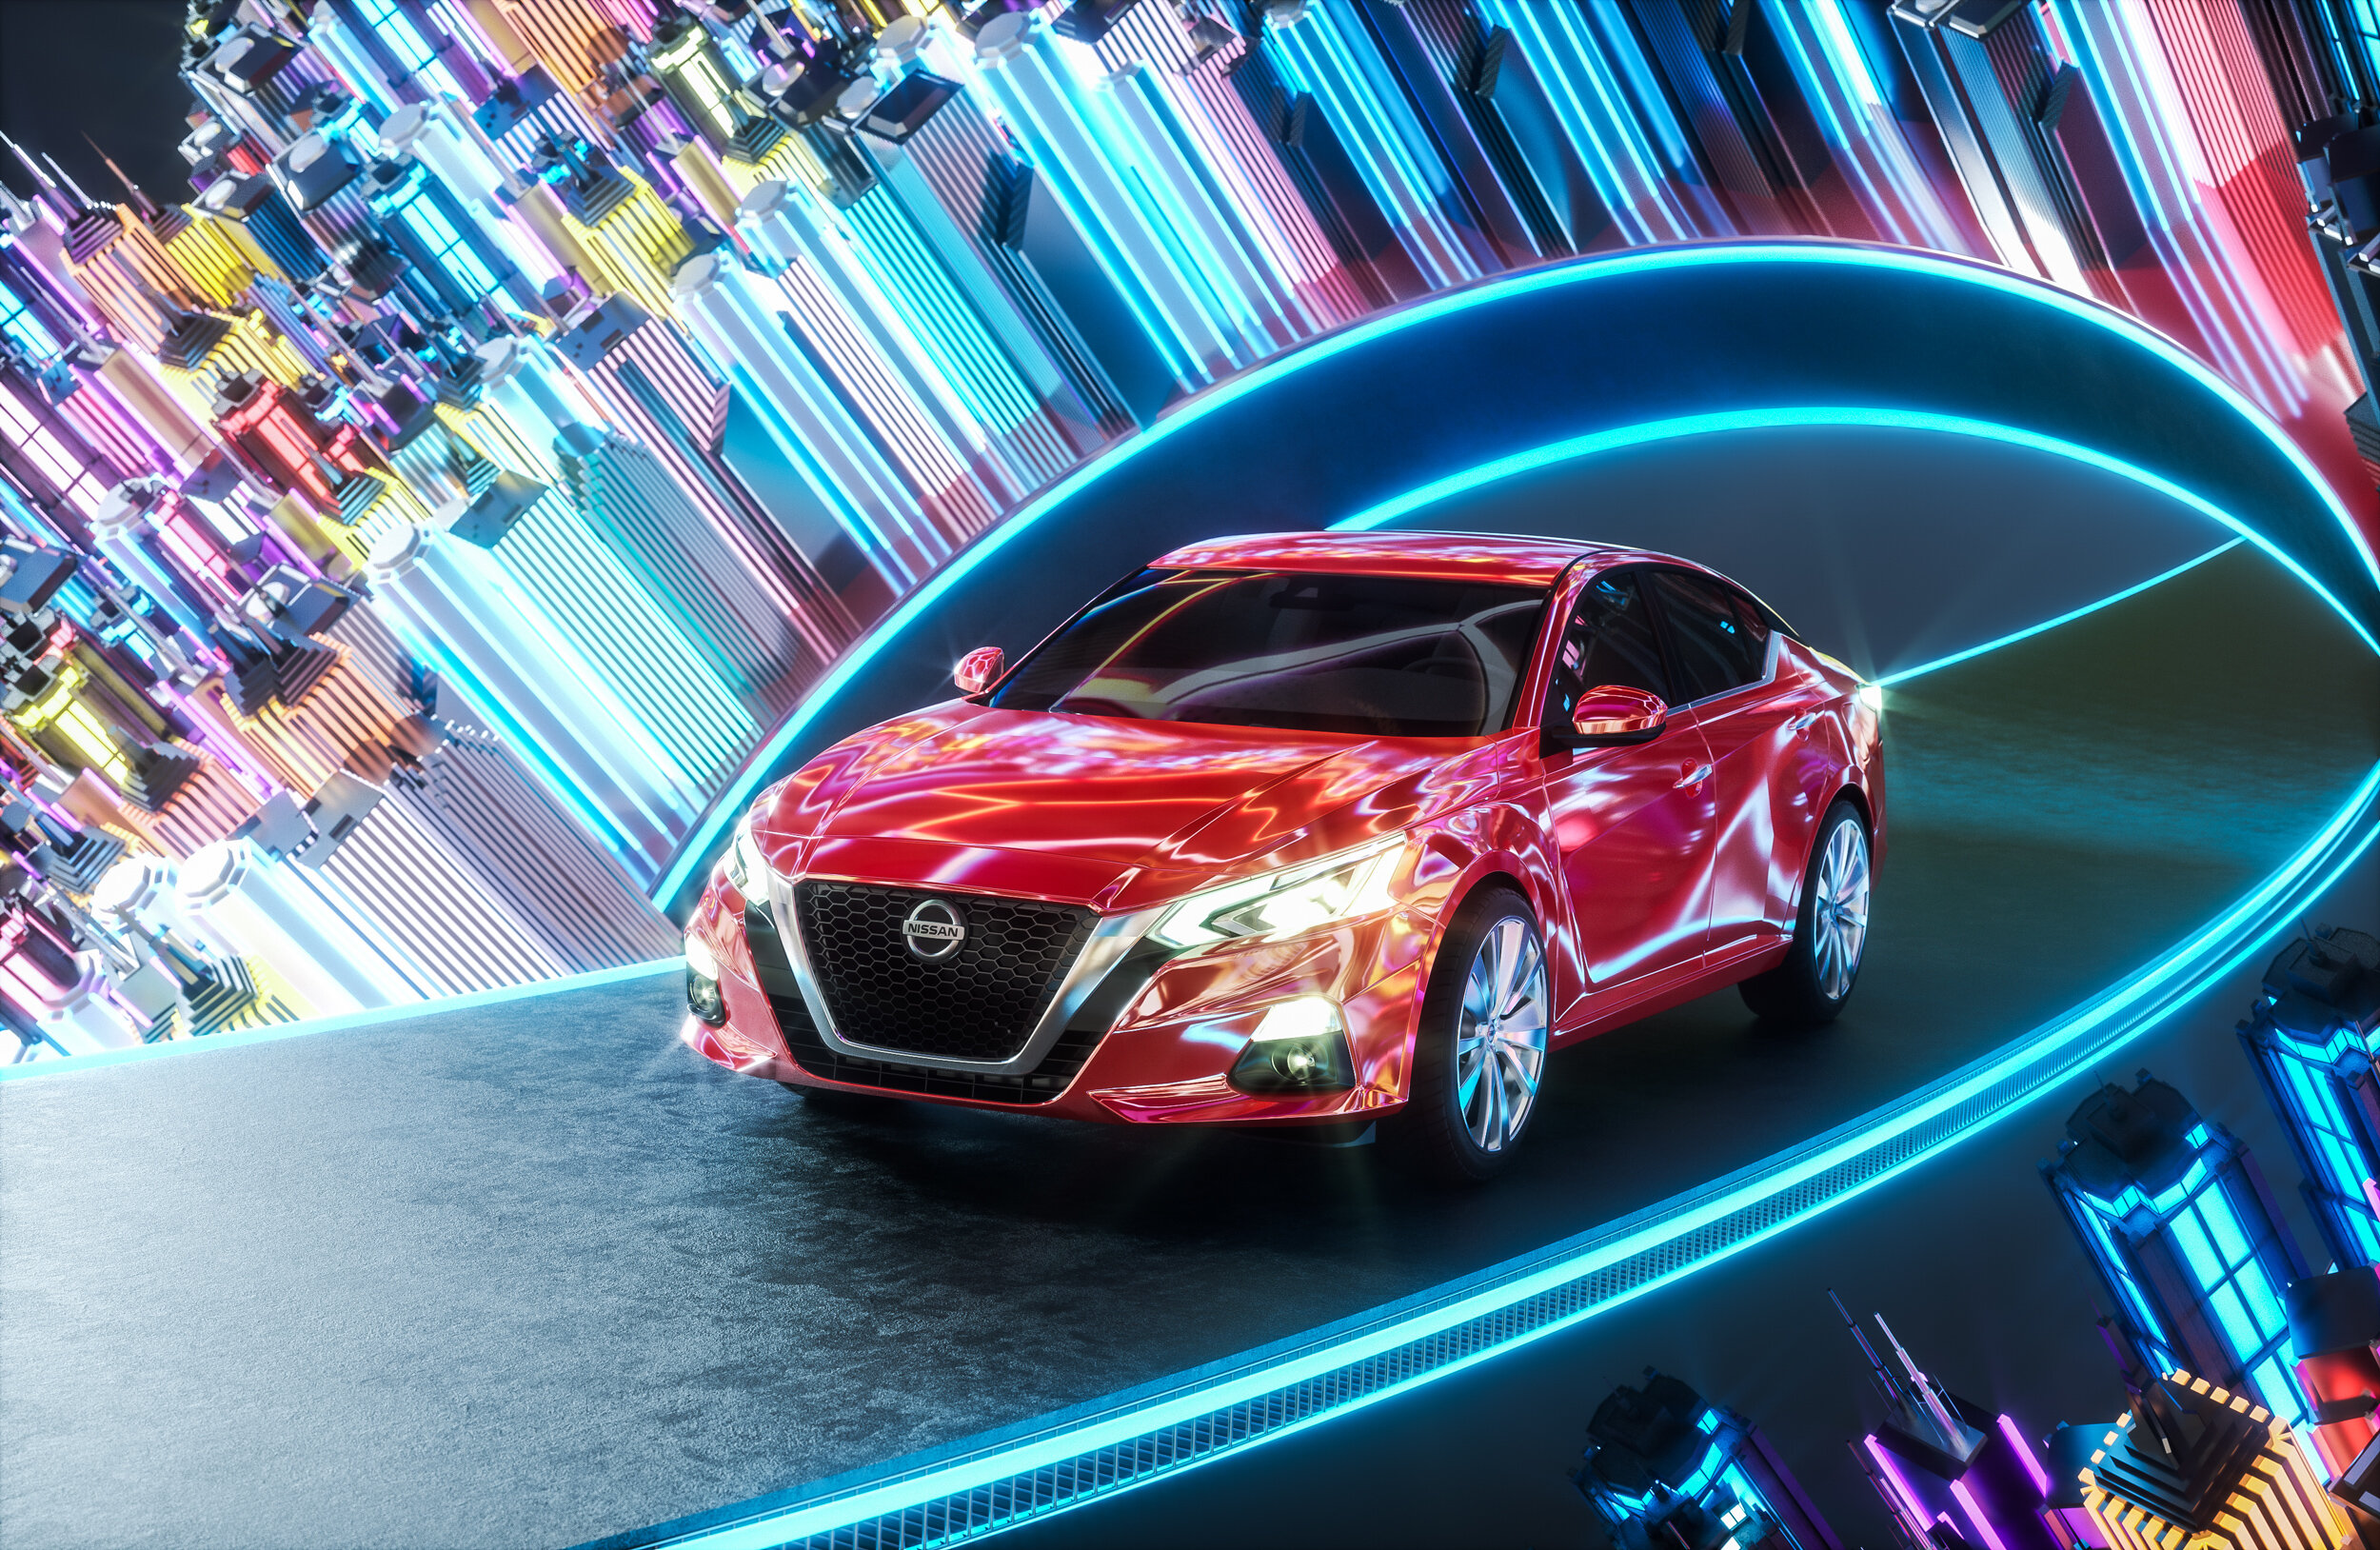 Nissan_2019Altima_EscapeTheGrind_Showcase-01.jpg